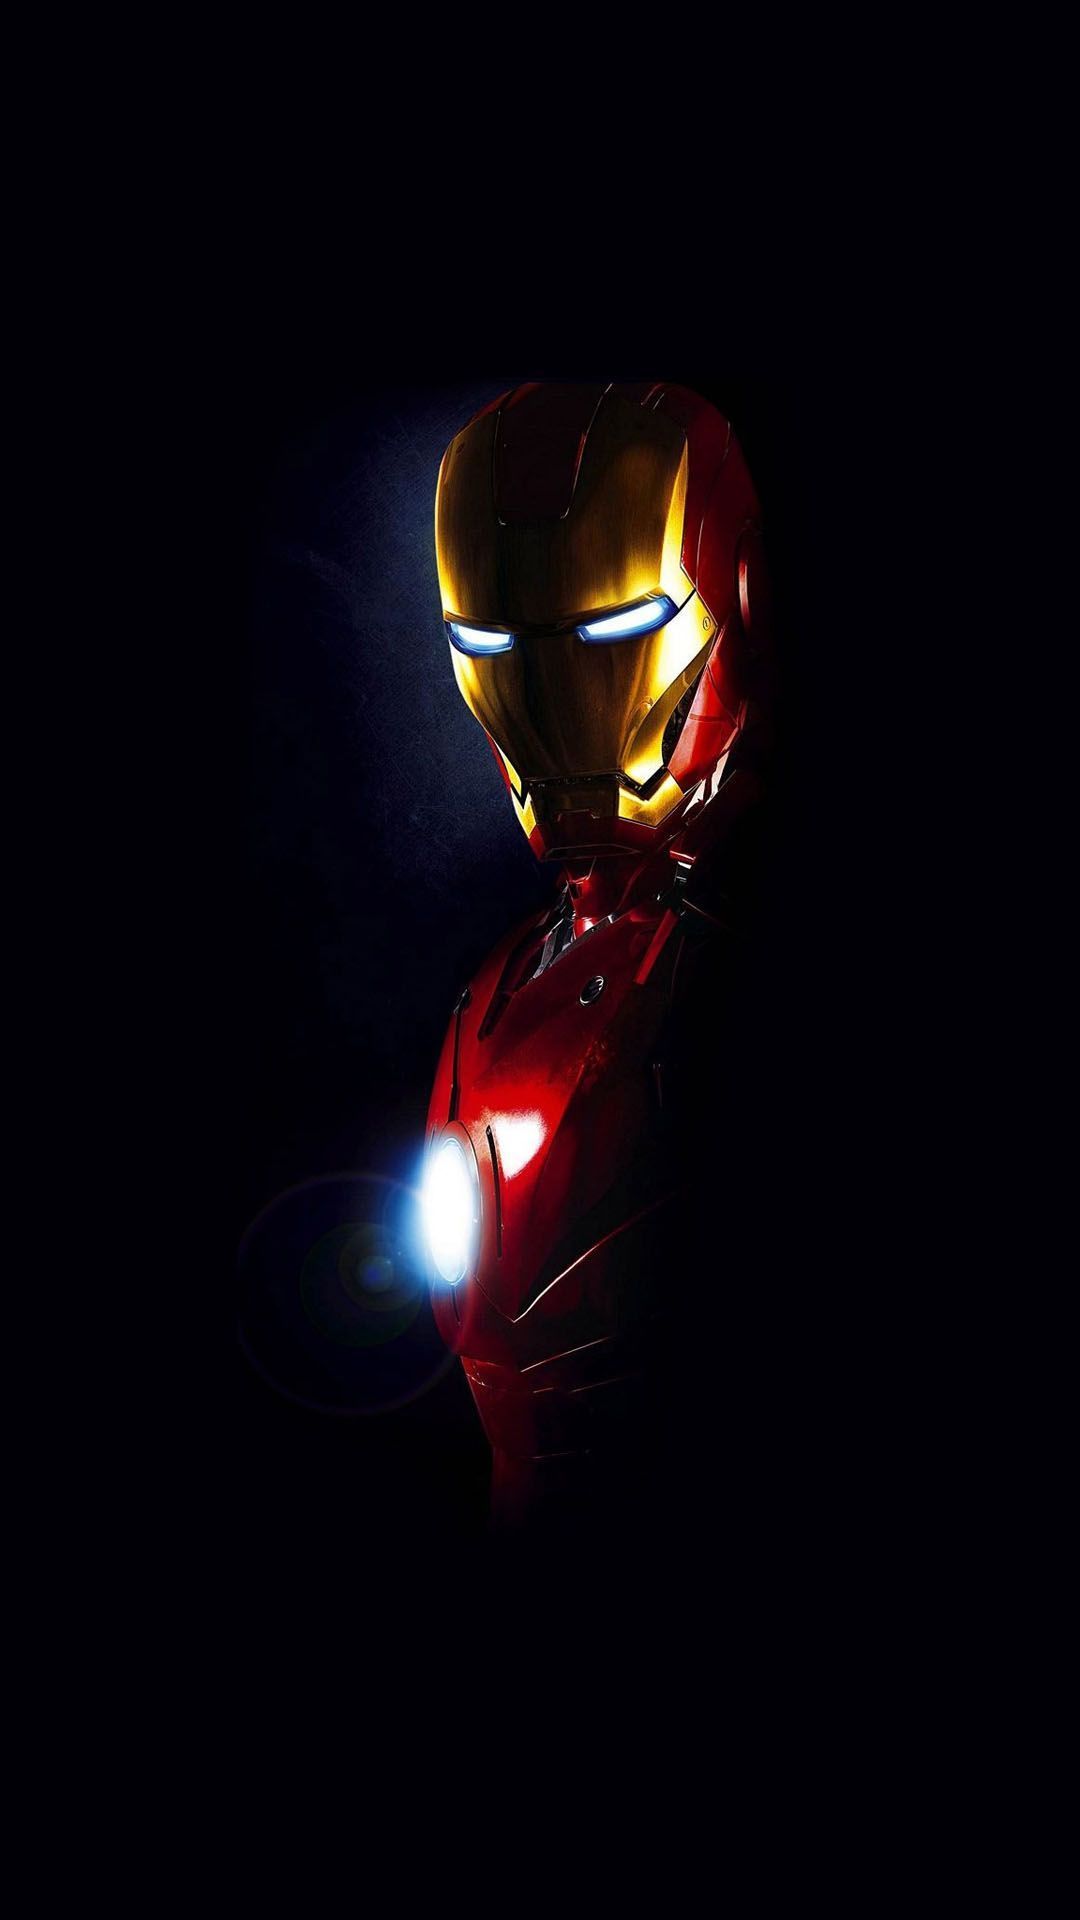 Iron Man Android Wallpaper Free .wallpaperaccess.com